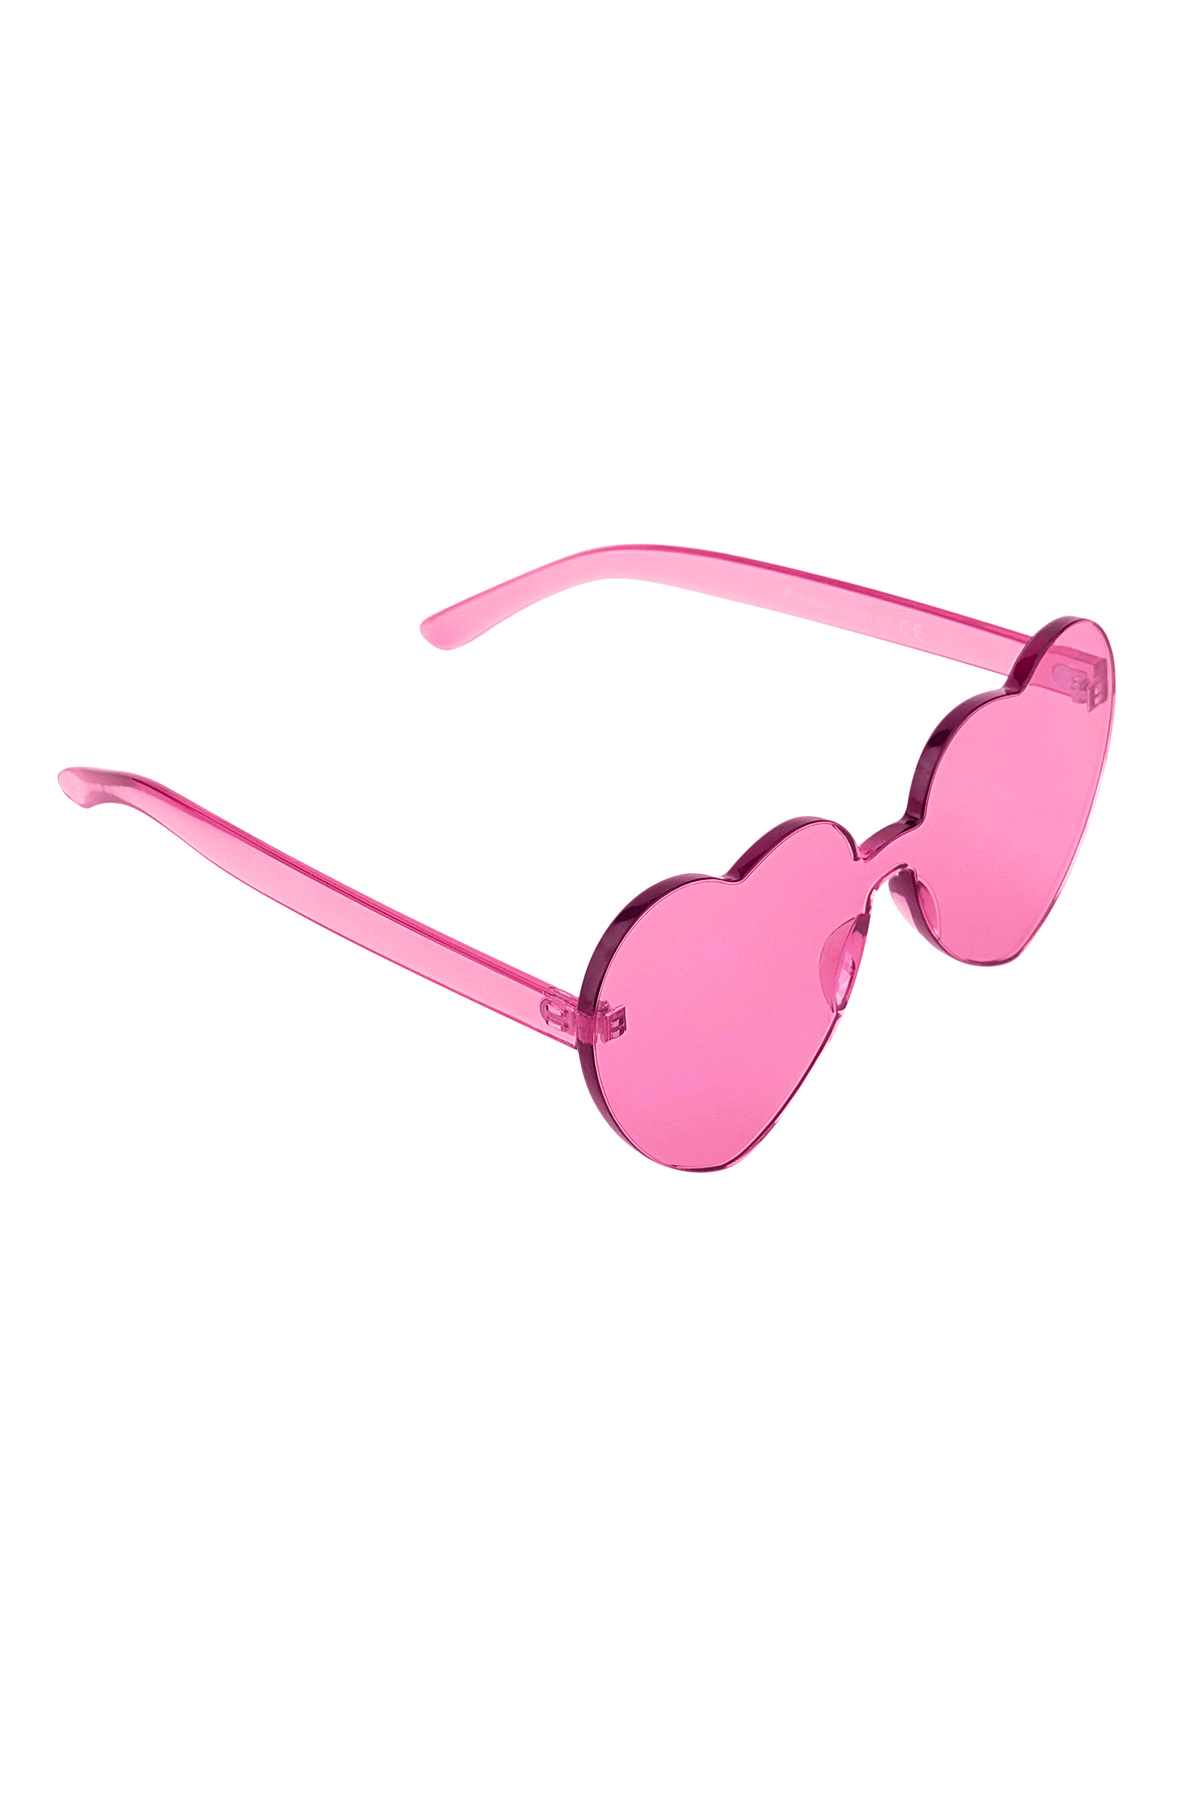 Heart sunglasses - pink 